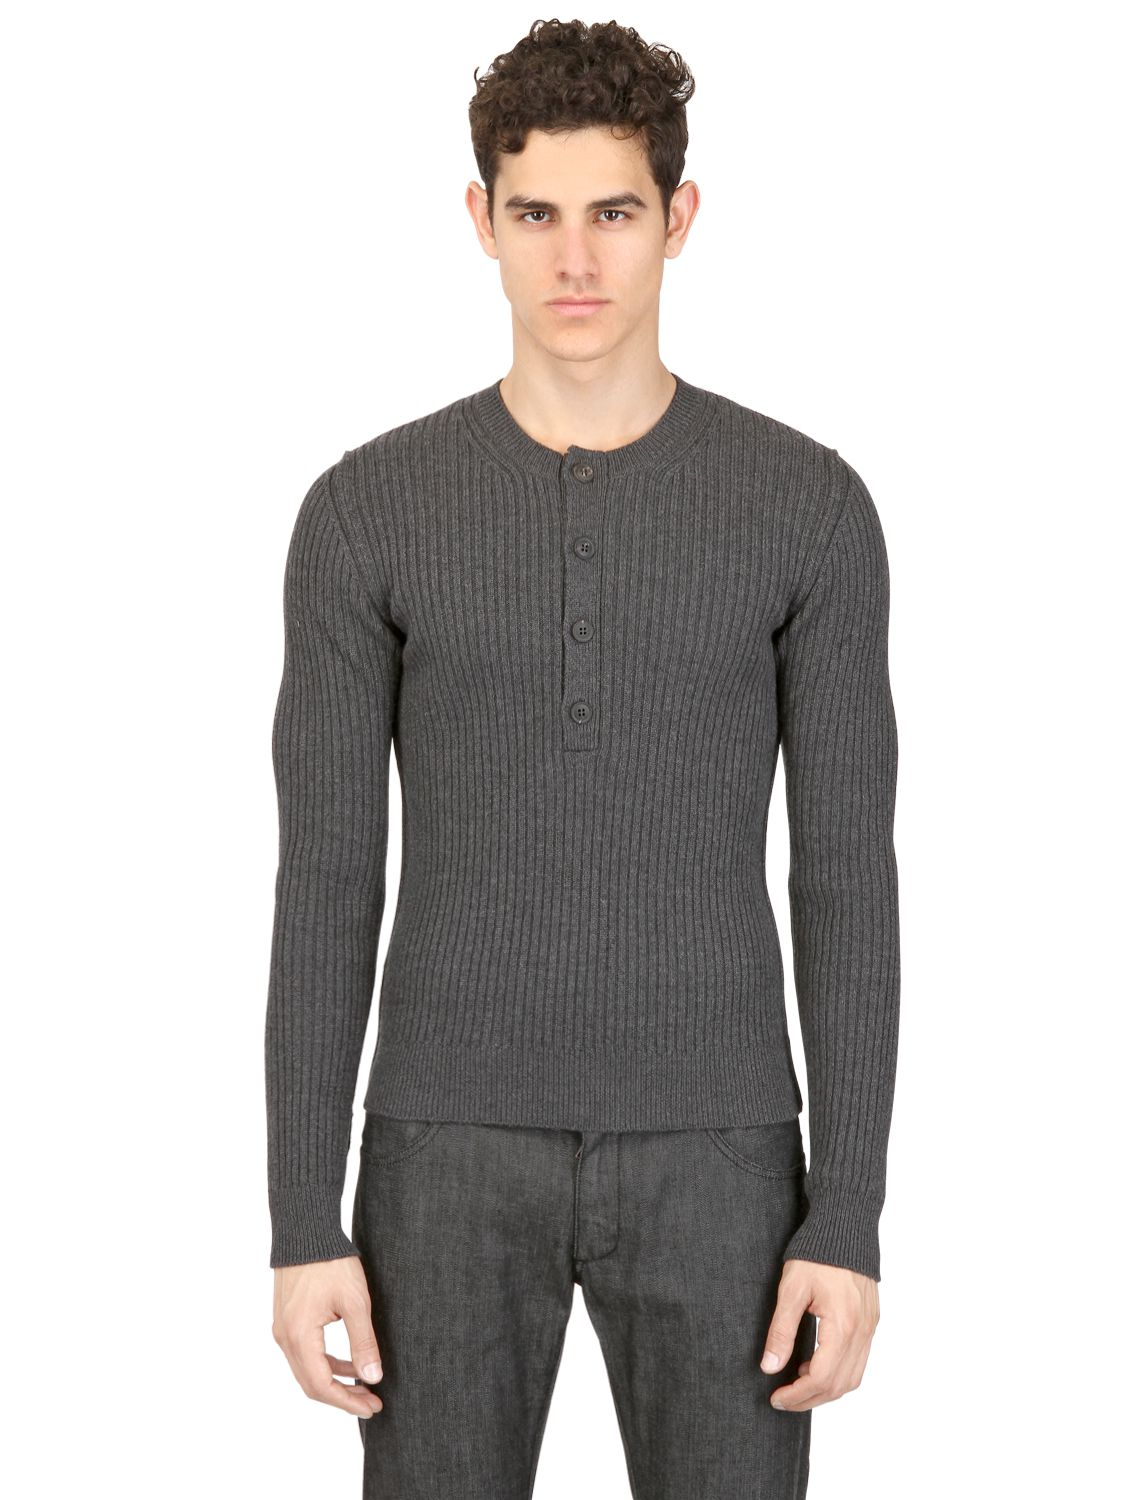 Lyst - Dolce & gabbana Ribbed Merino Wool Henley Sweater in Gray for Men